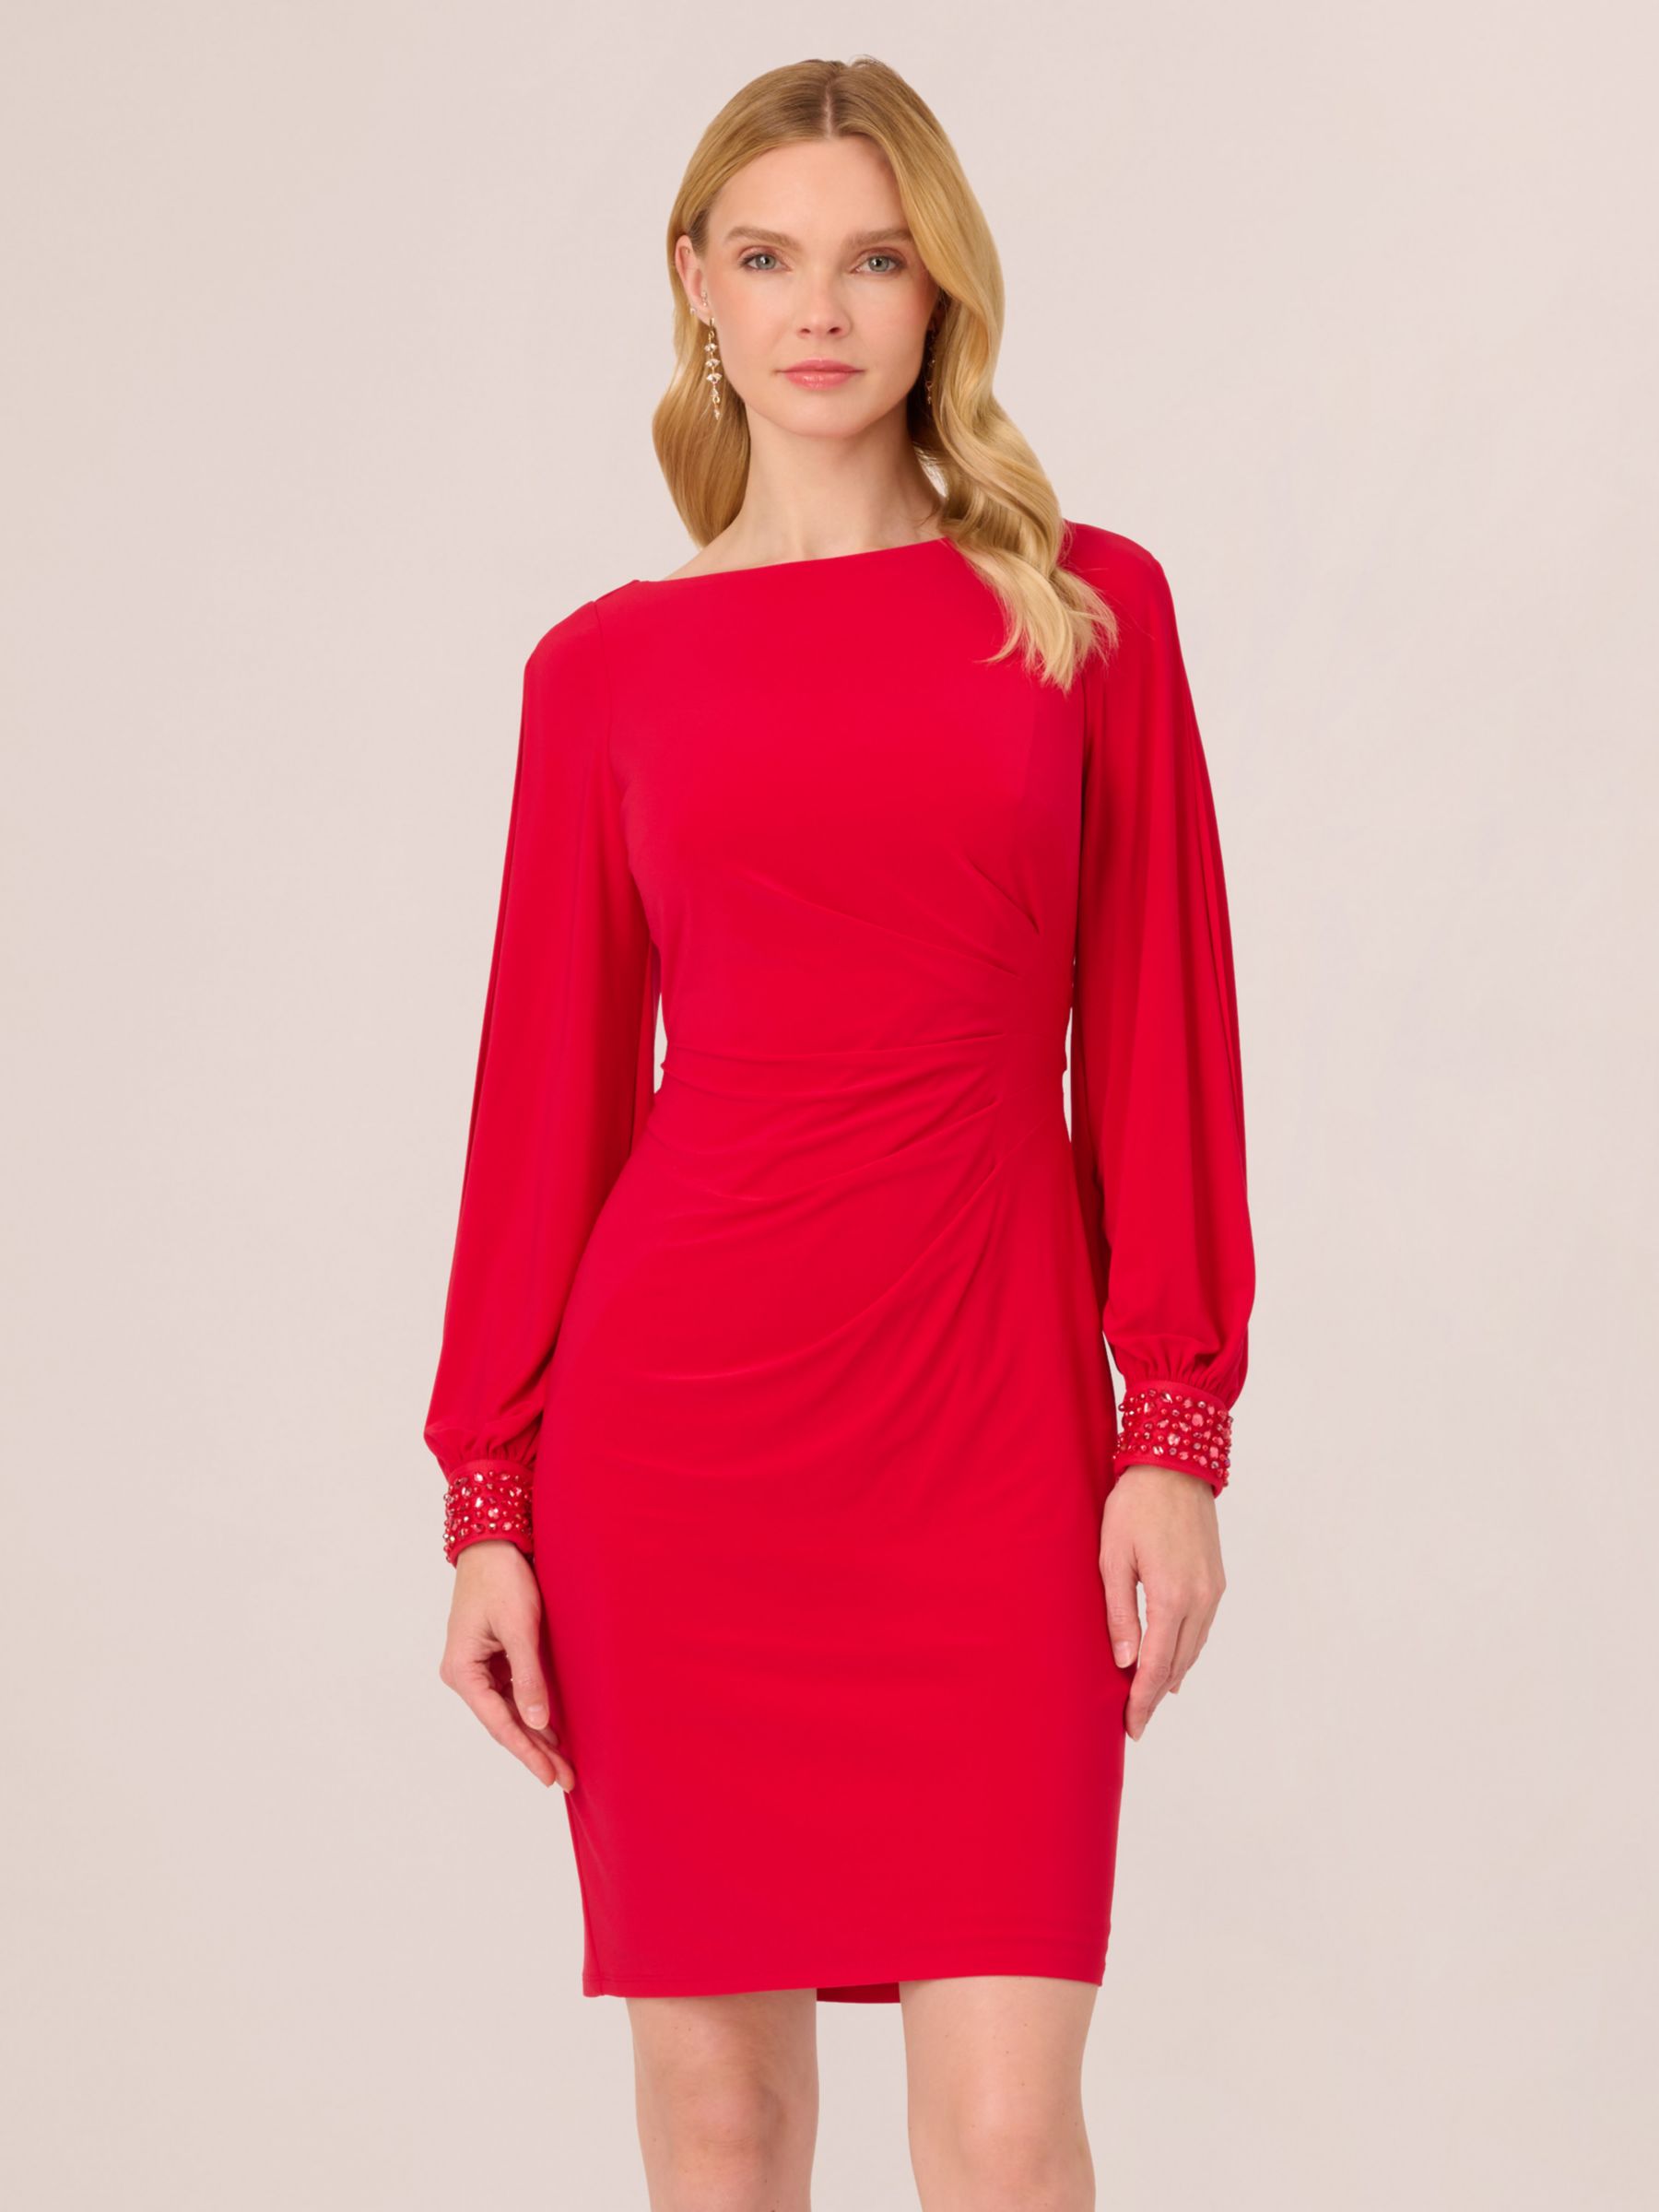 Adrianna Papell Beaded Cuff Short Jersey Dress, Hot Ruby